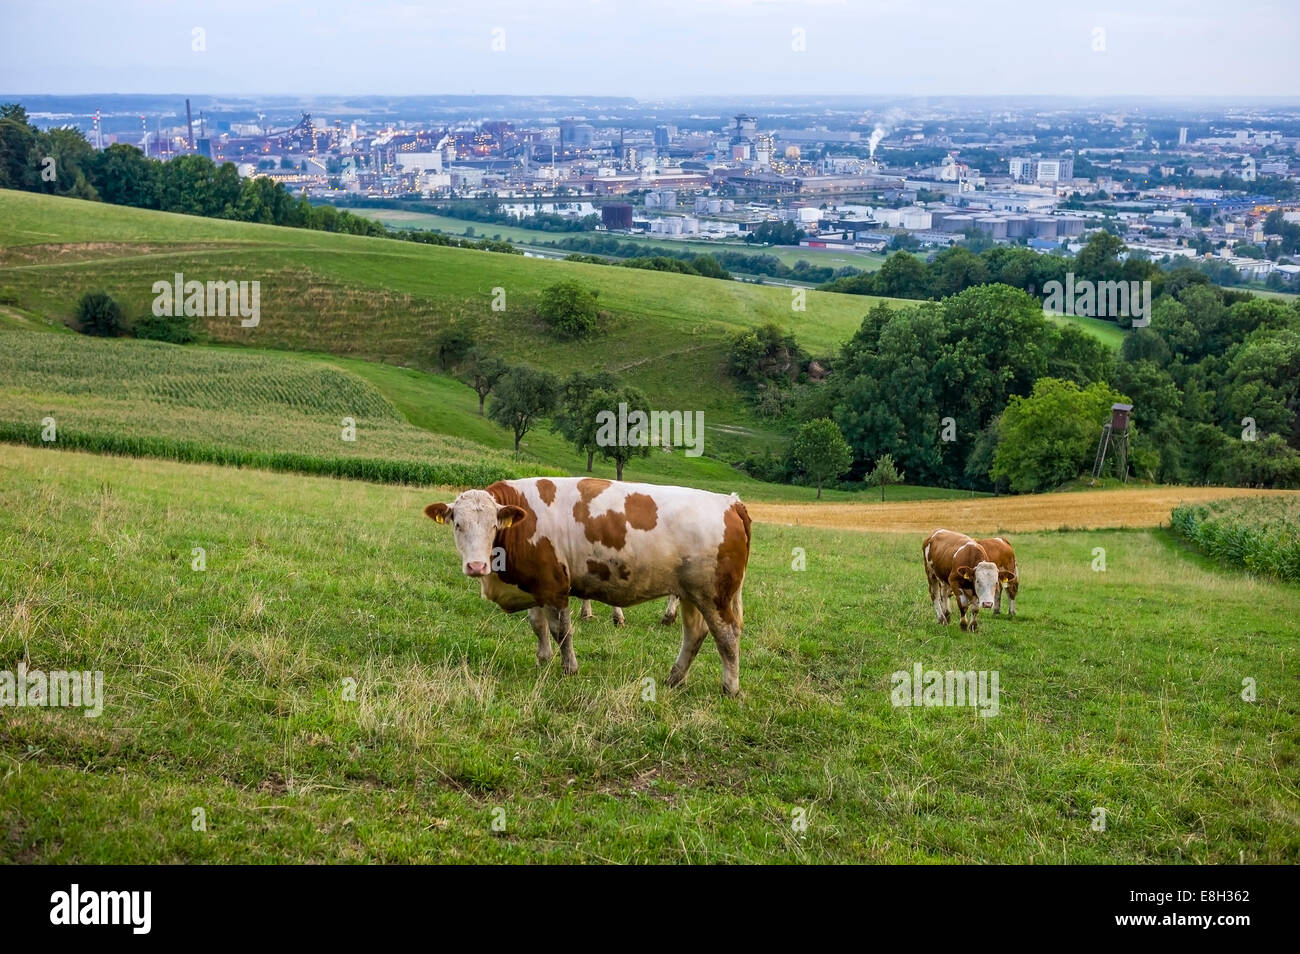 Austria, Upper Austria, Linz, Cows on alp, Industrial area in the background Stock Photo